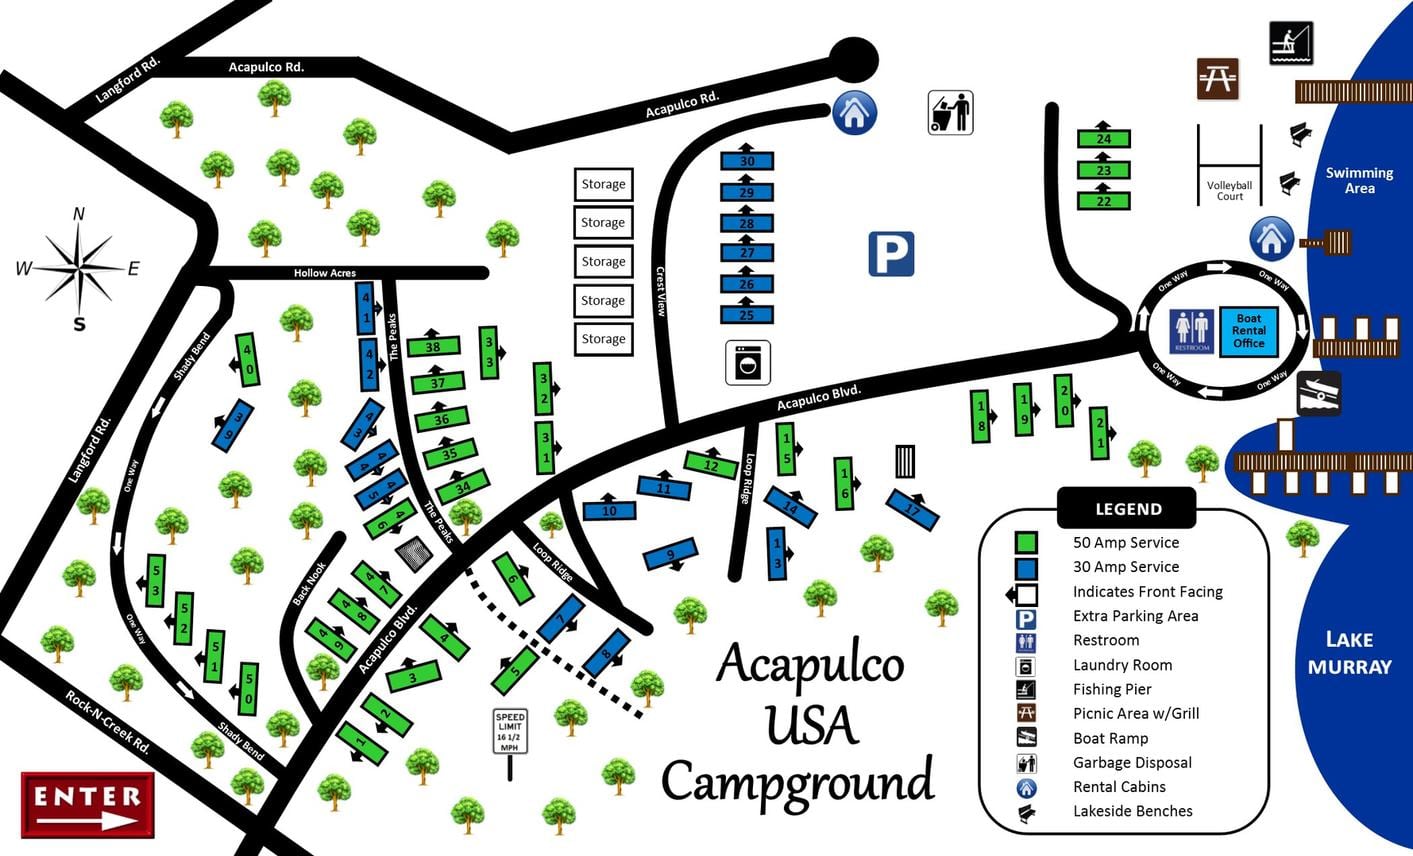 Acapulco USA Campground